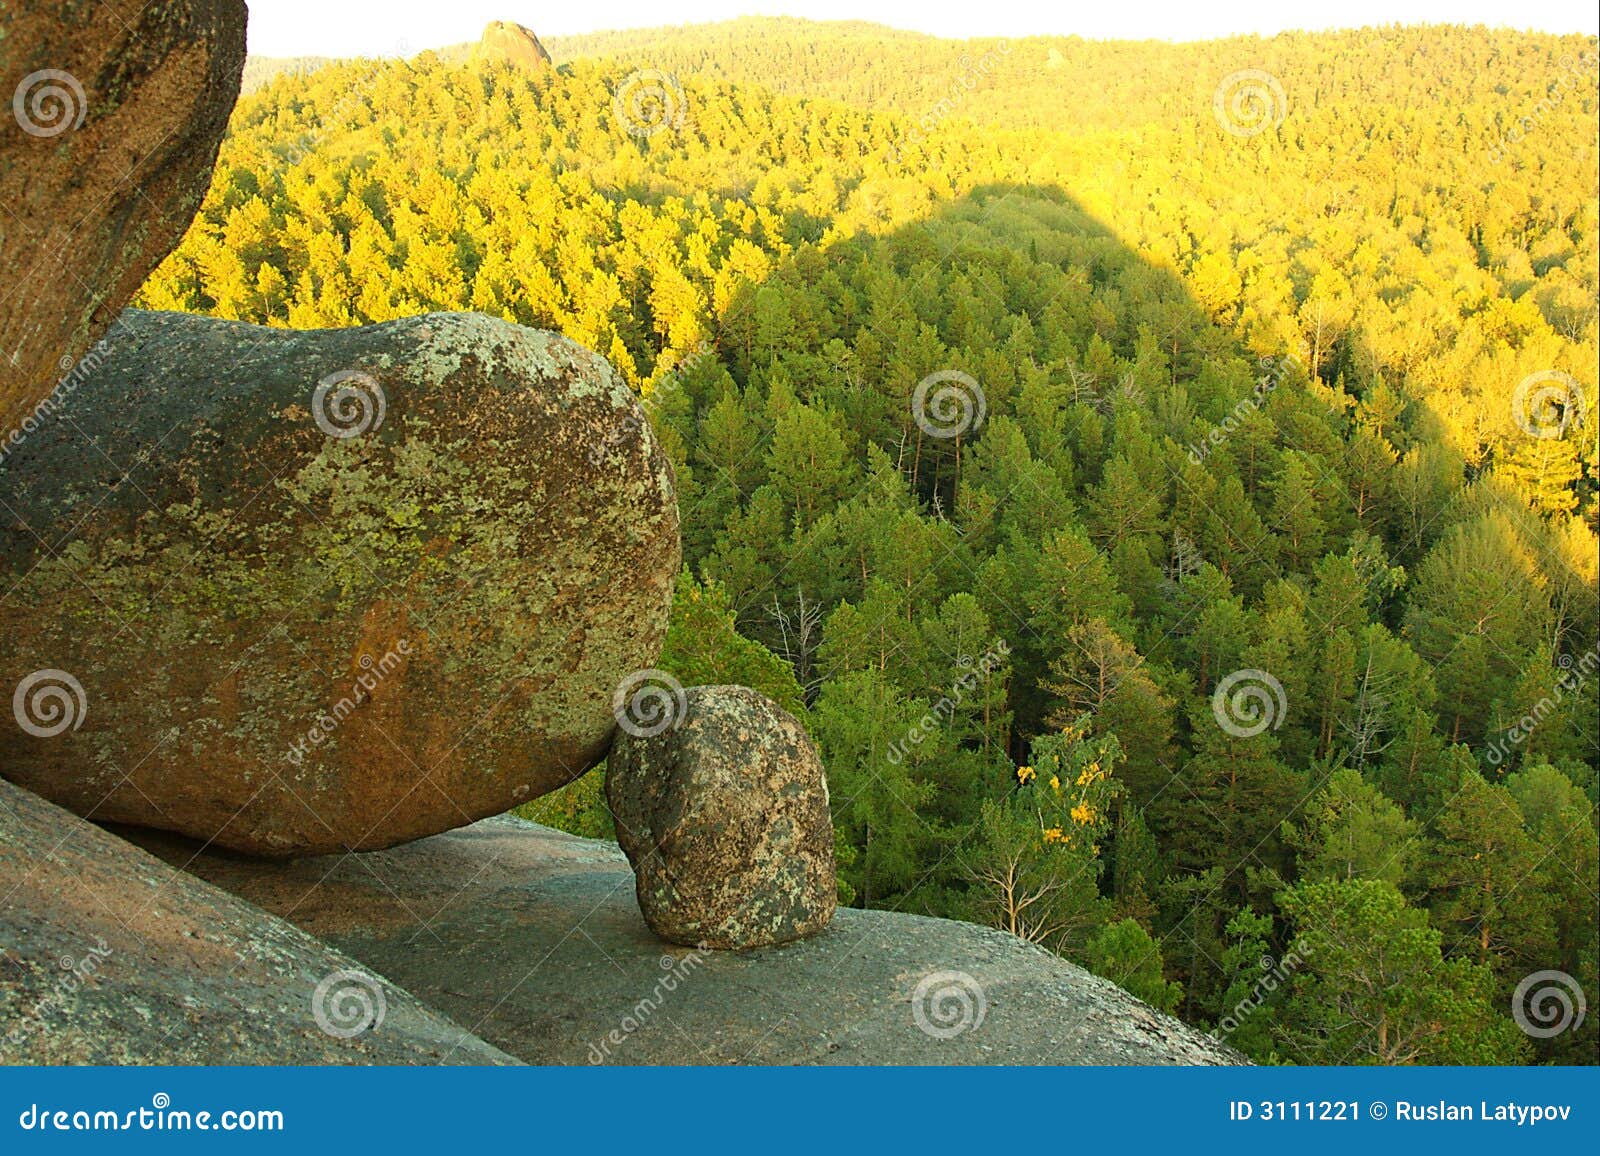 stolby mountain in siberia